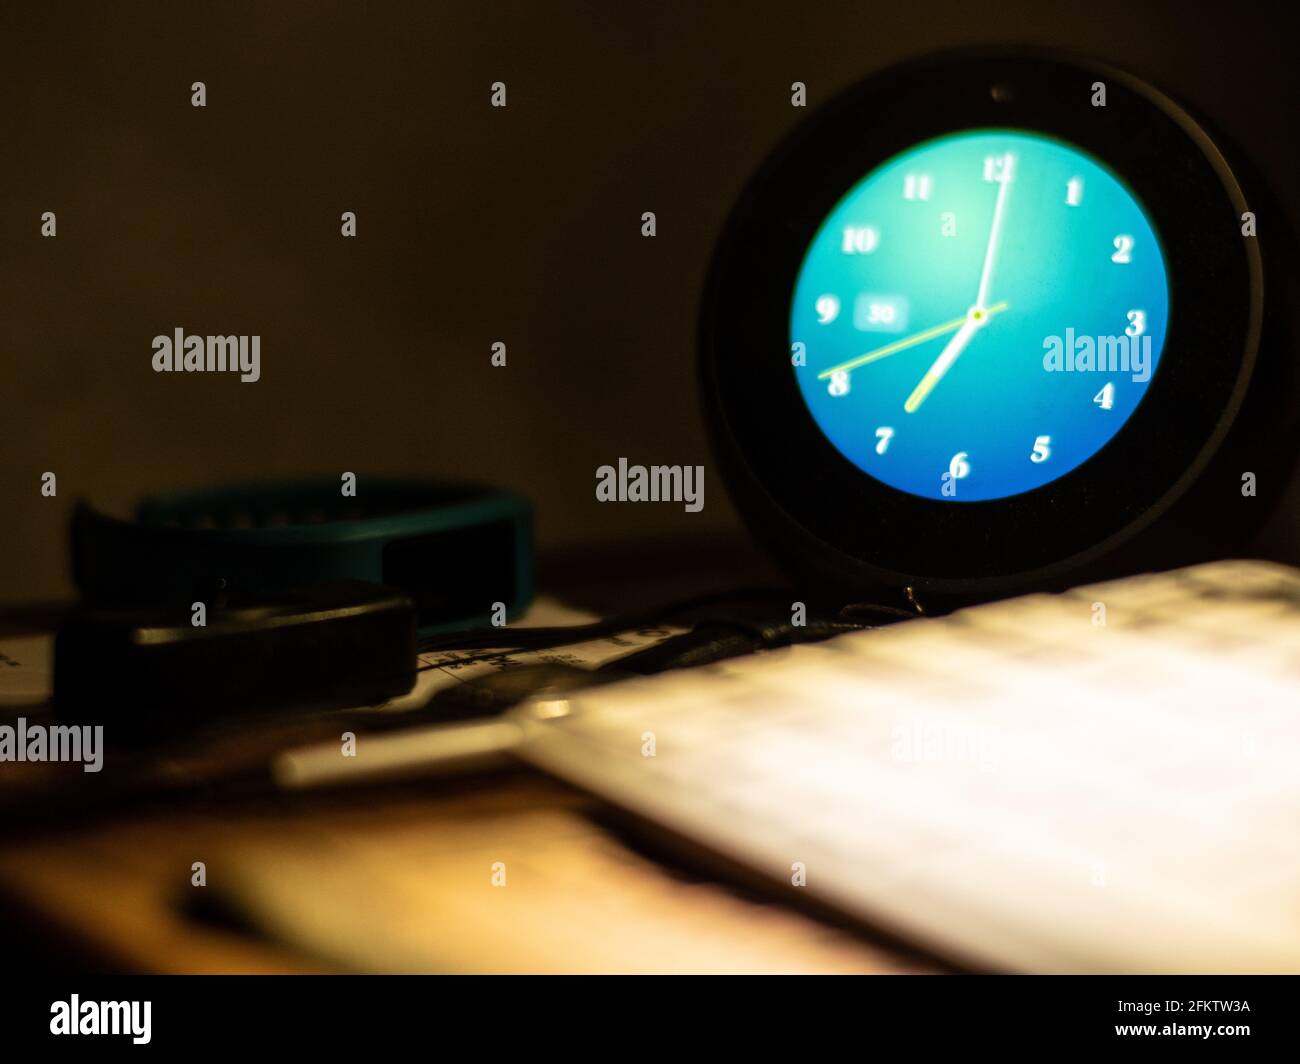 Alexa-Uhr mit 7 hs neben dem Desktop-Computer Stockfotografie - Alamy